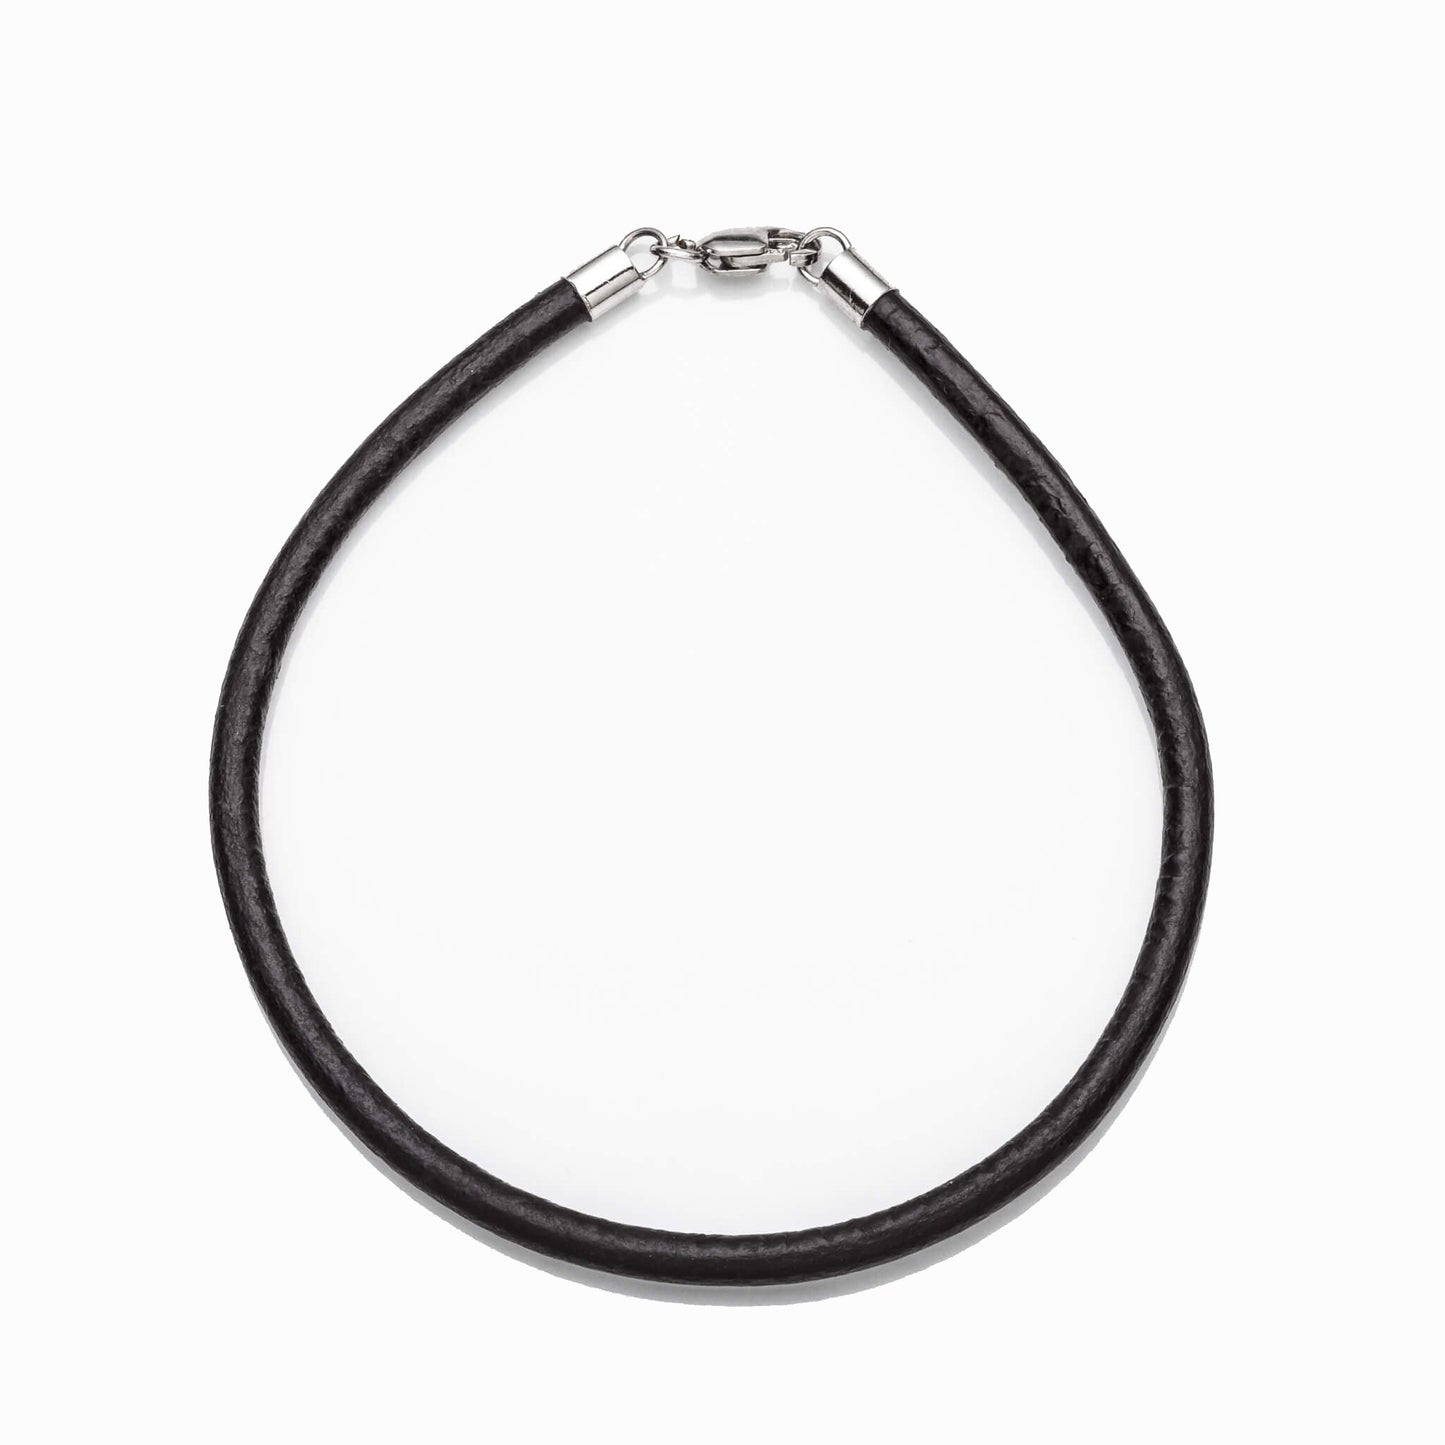 Bracelet (BR3090S) - Leather Light Cord Bracelet, 9" Length with 3.0mm Thickness